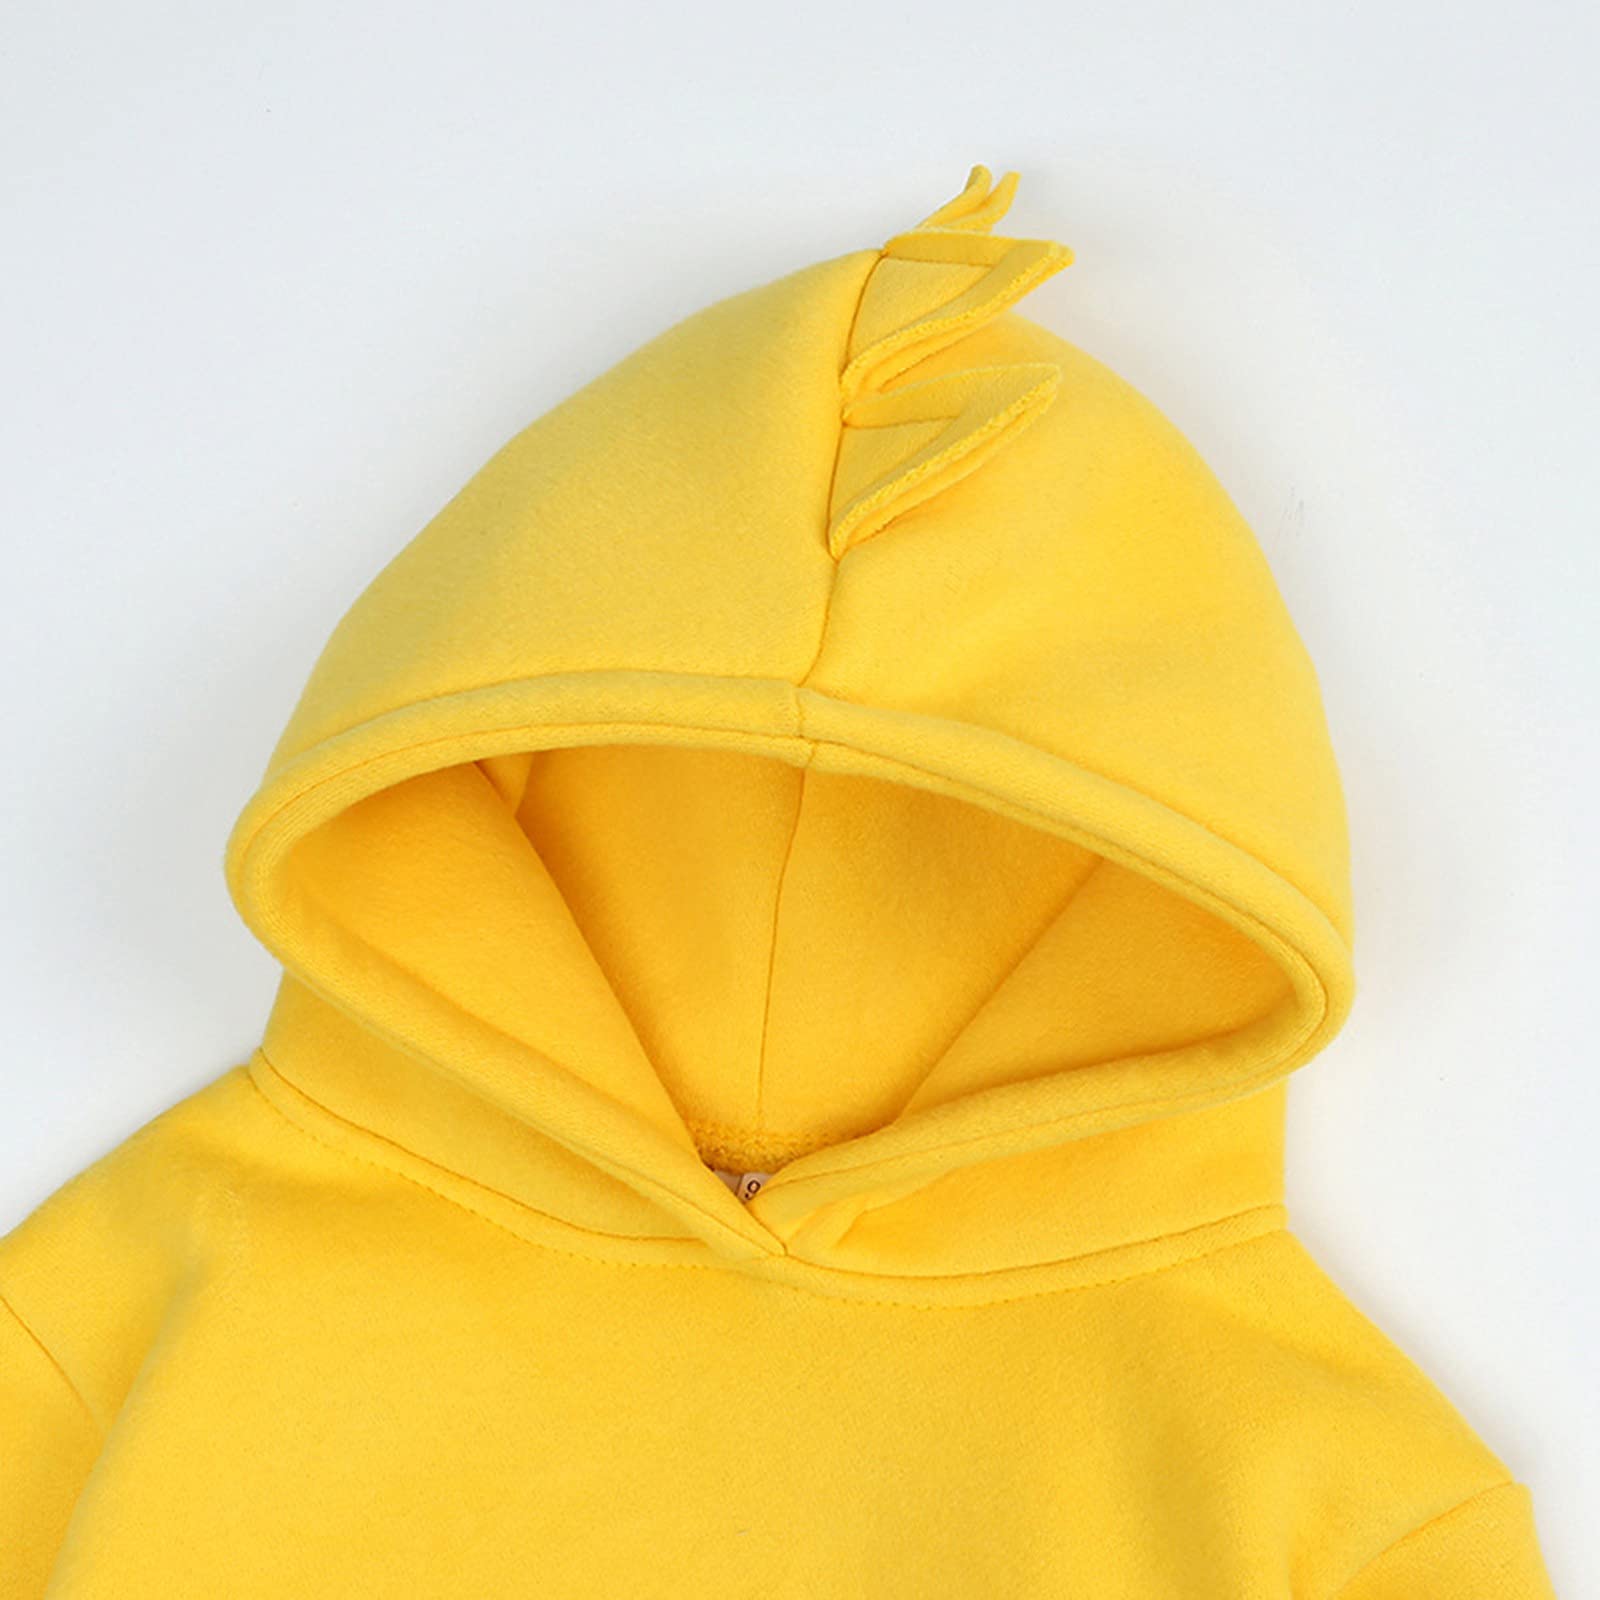 NSQFKALL Splice Dinosaur Fleece Hoodie for Toddler Baby Girls Boys Hem Slit Sweatshirt Sweaters Top